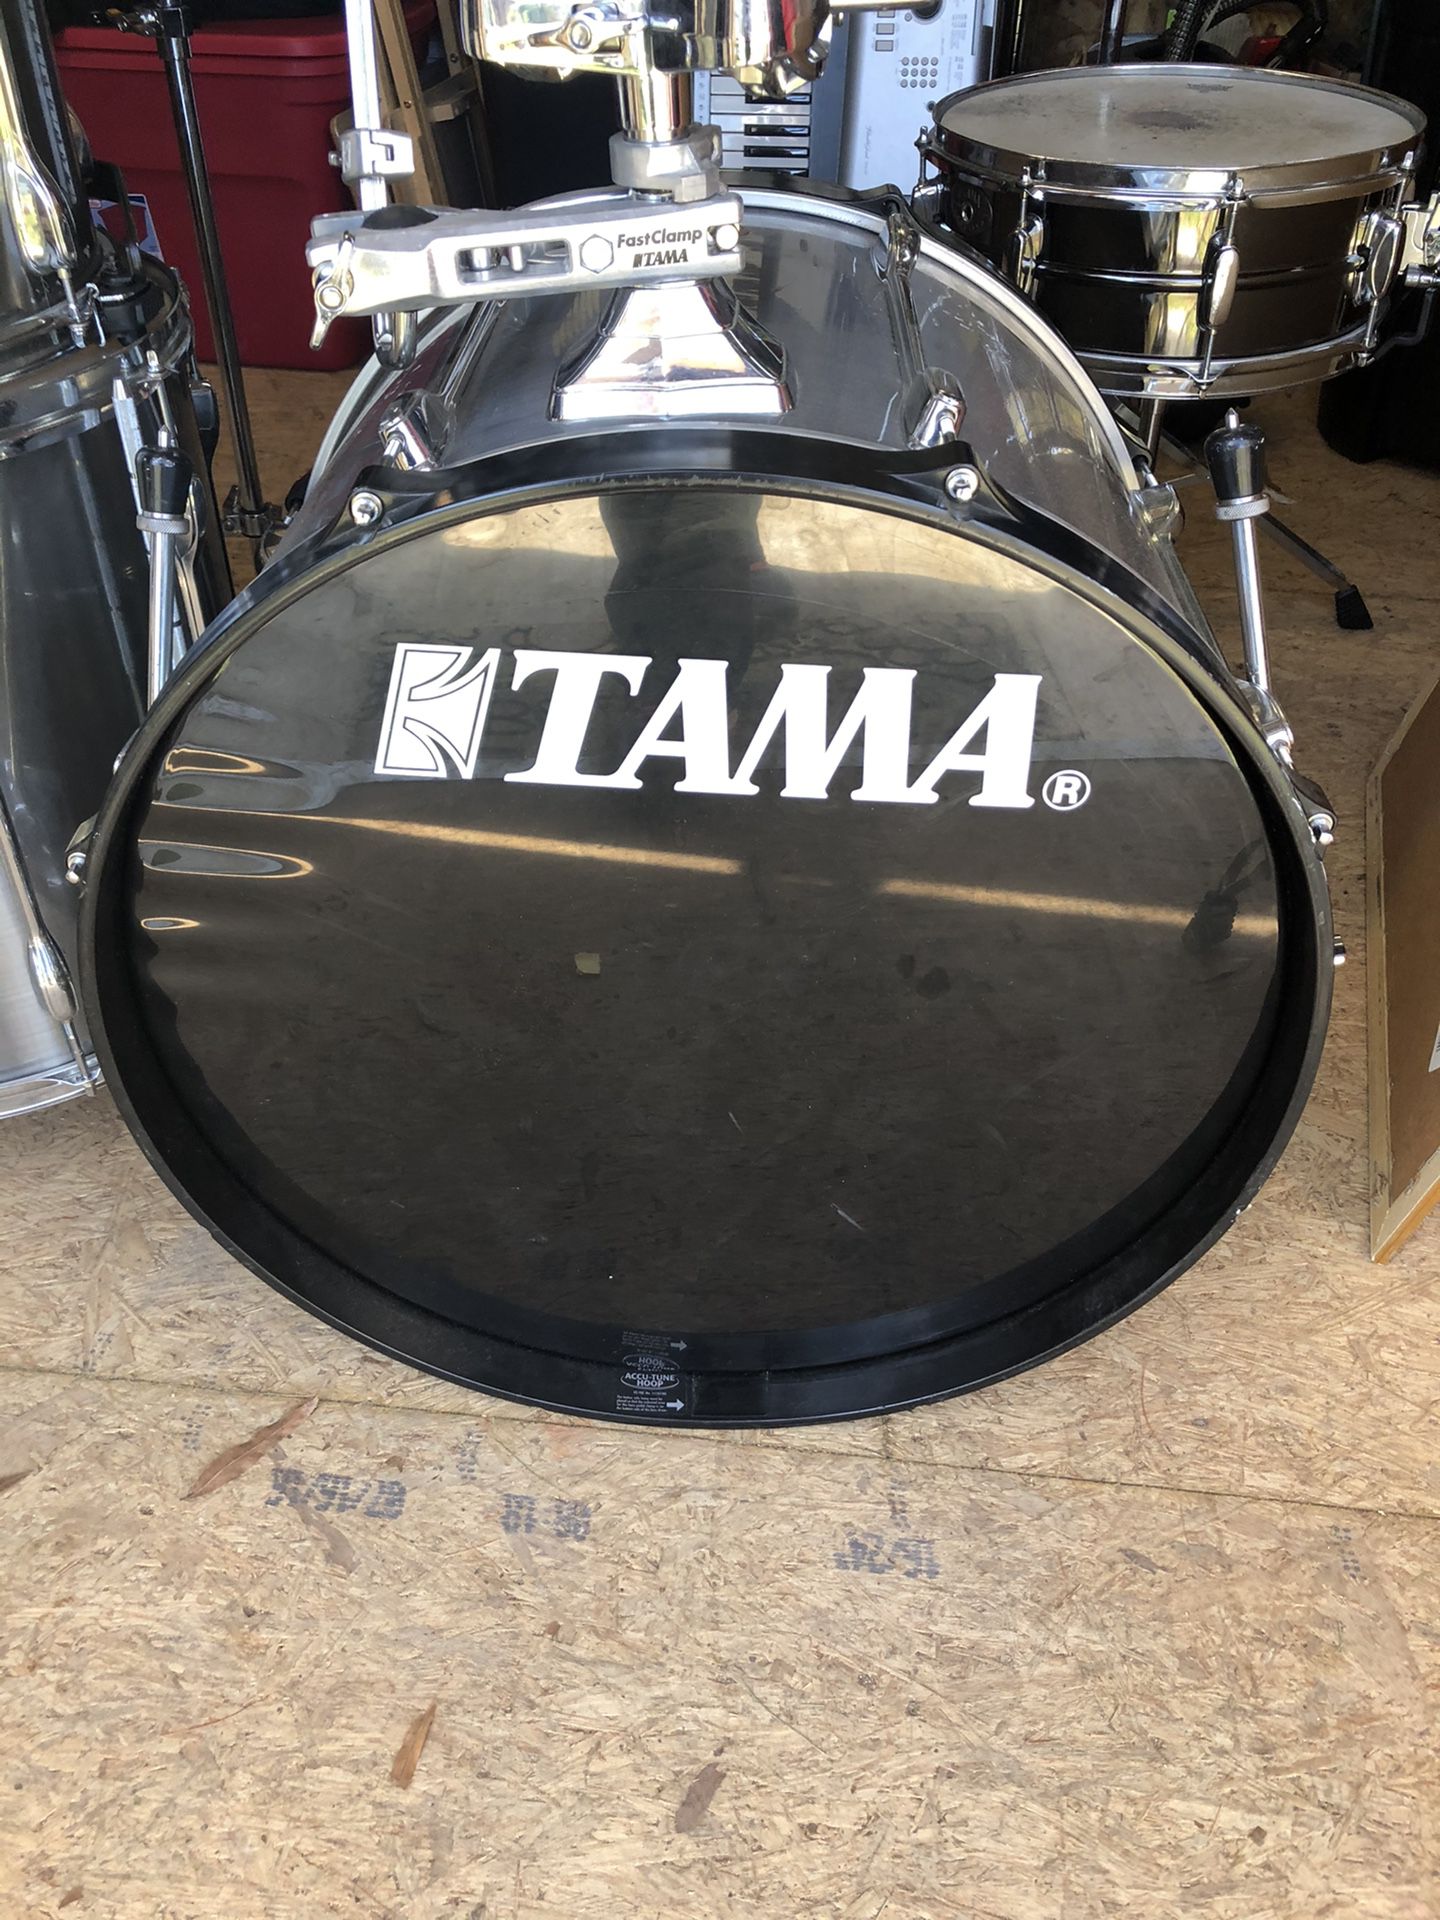 Tama rockstar drum set